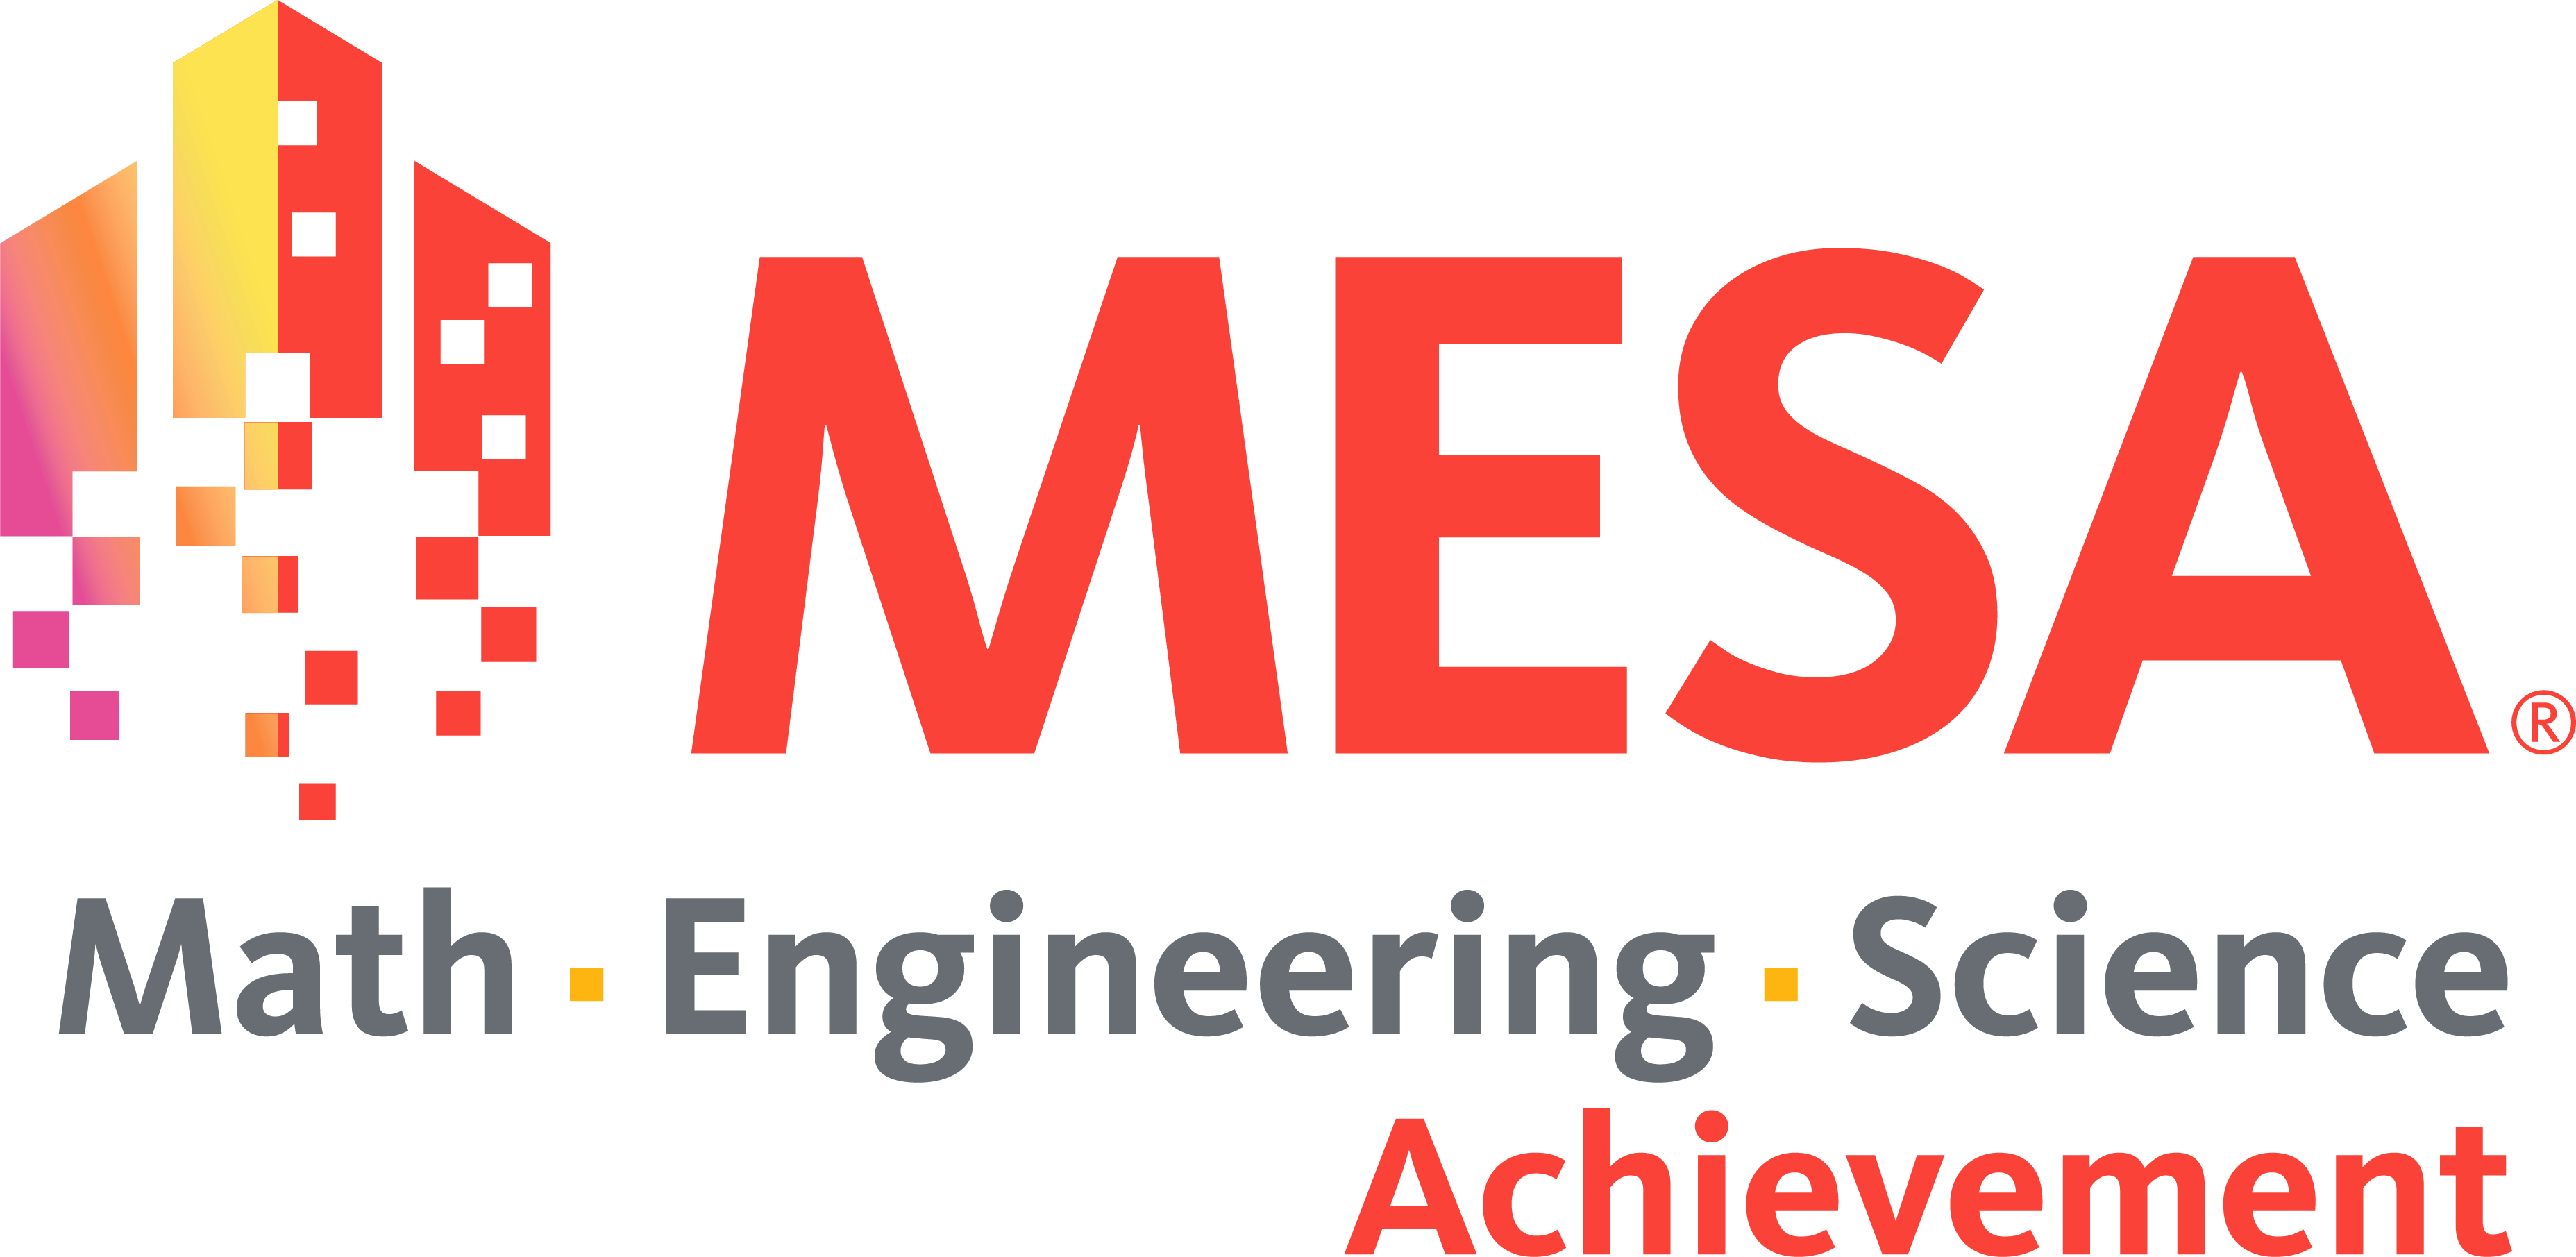 Mathematics, Engineering, and Science Achievement logo